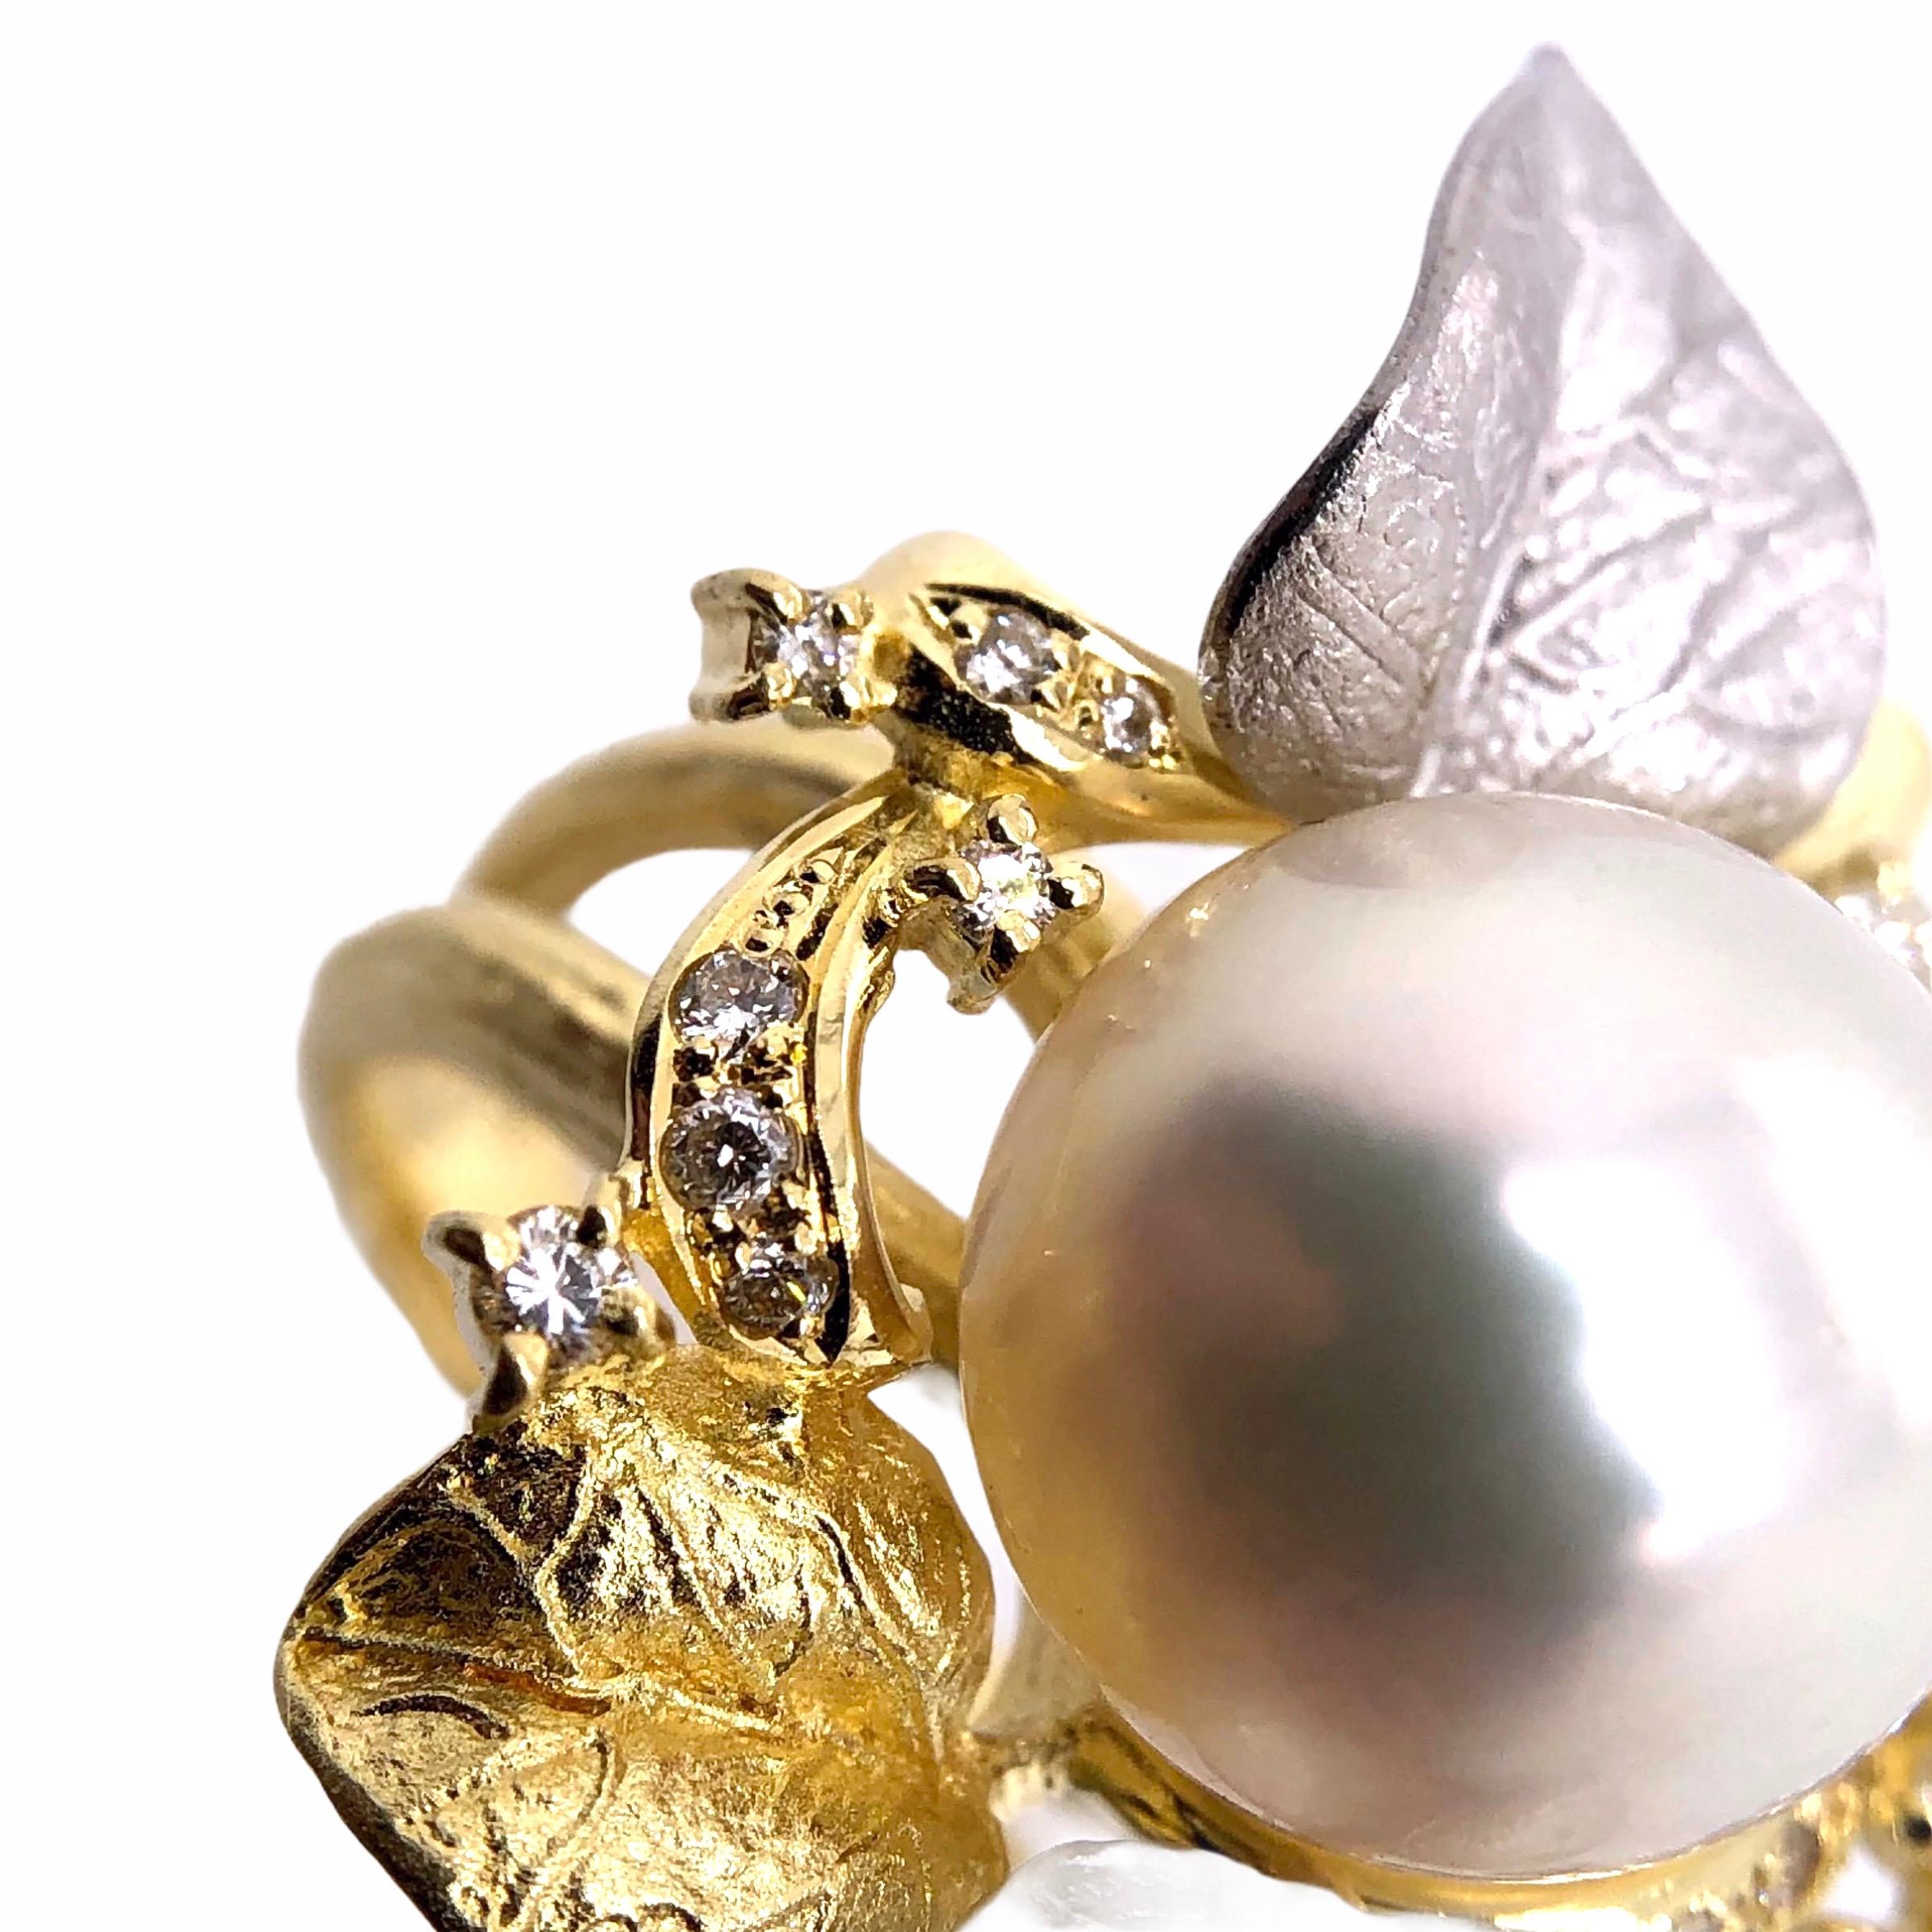 PARIS Craft House 13mm Pearl Diamond Ring in 18 Karat Yellow Gold.

- 1 Pearl/13mm
- Diamonds/0.28ct
- 18K Yellow Gold/16.12ct

Designed and crafted at PARIS Craft House.